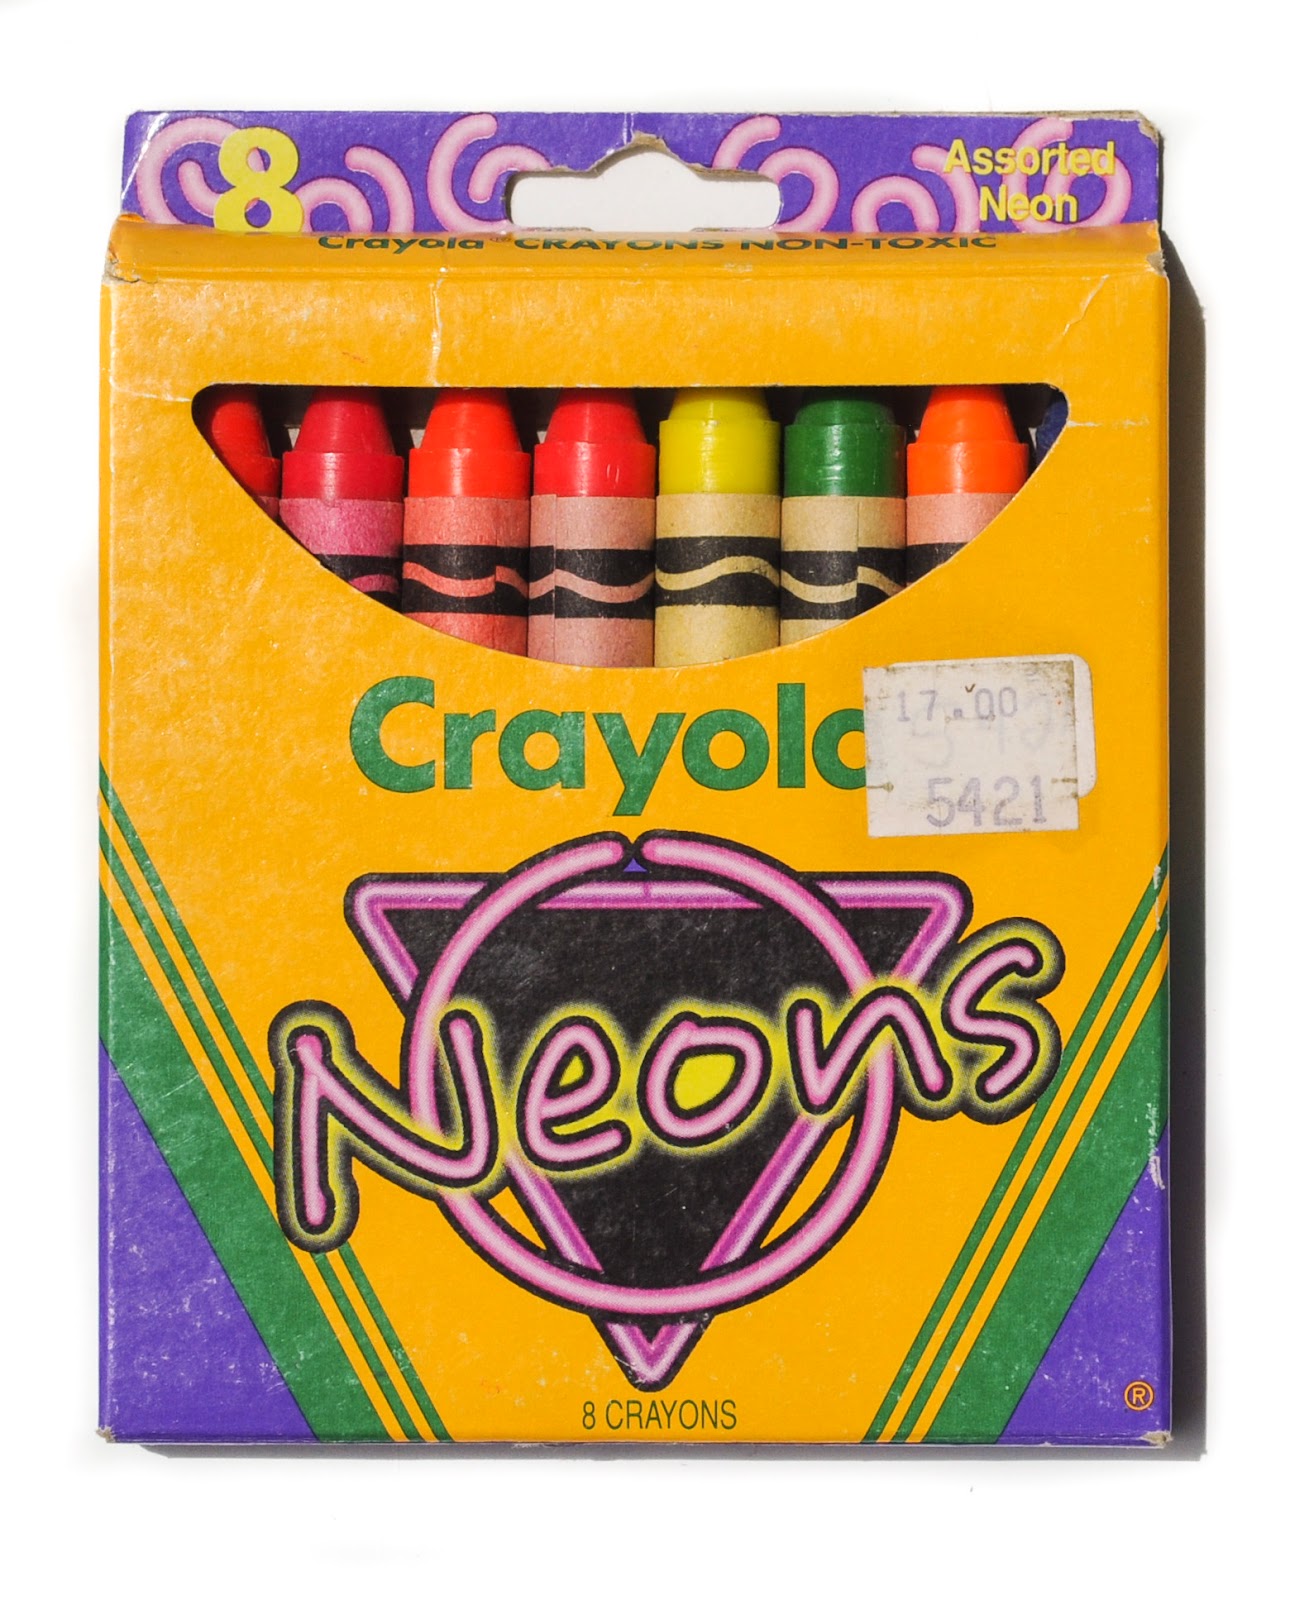 Crayola Neon Crayons Review 